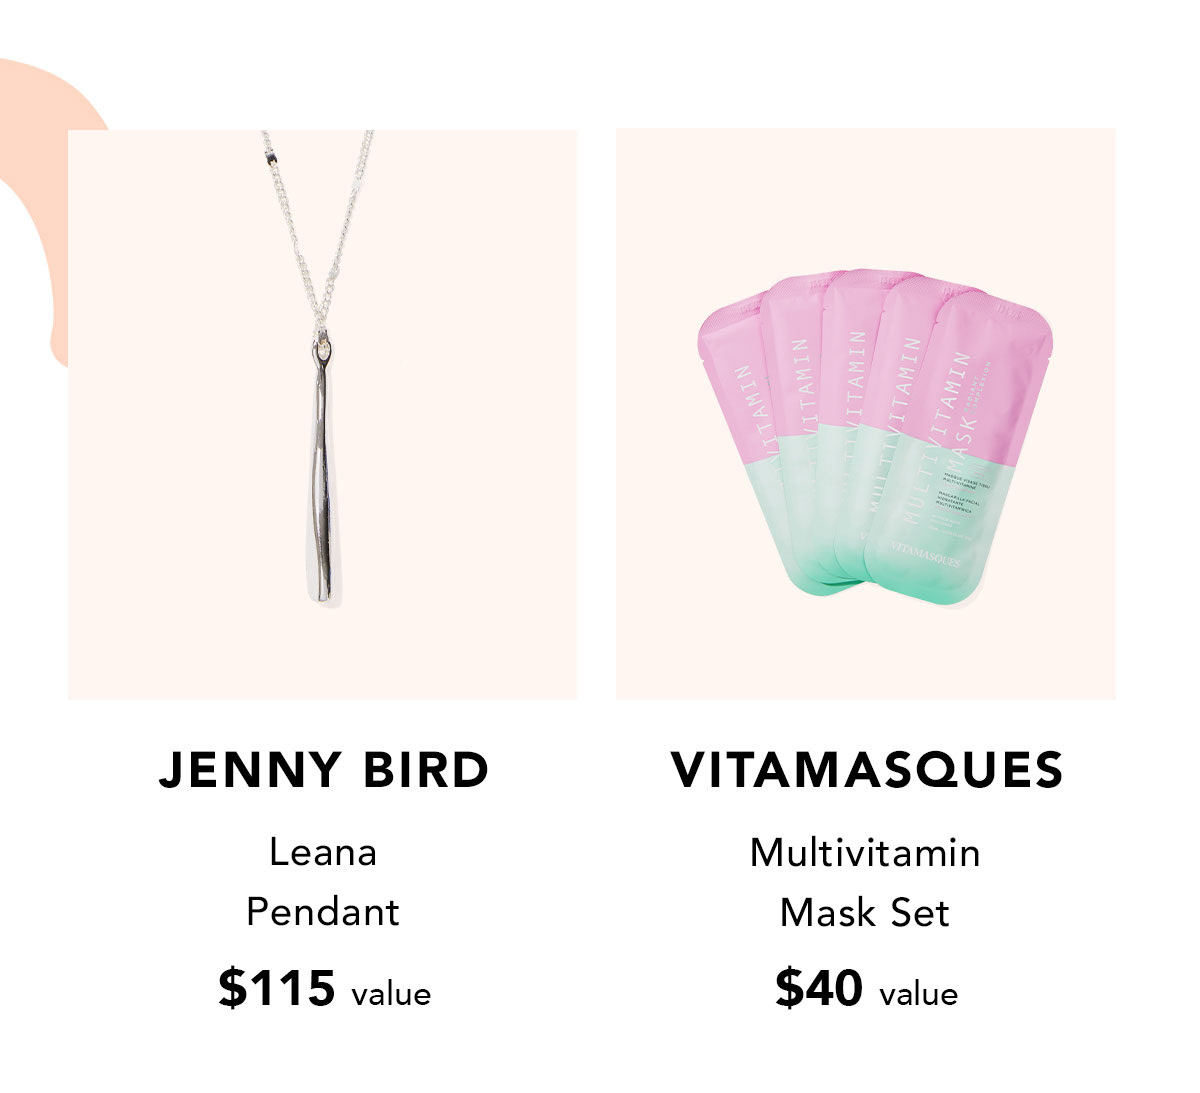 JENNY BIRD Leana Pendant $115 value | Vitamasques Multivitamin Mask Set $40 value